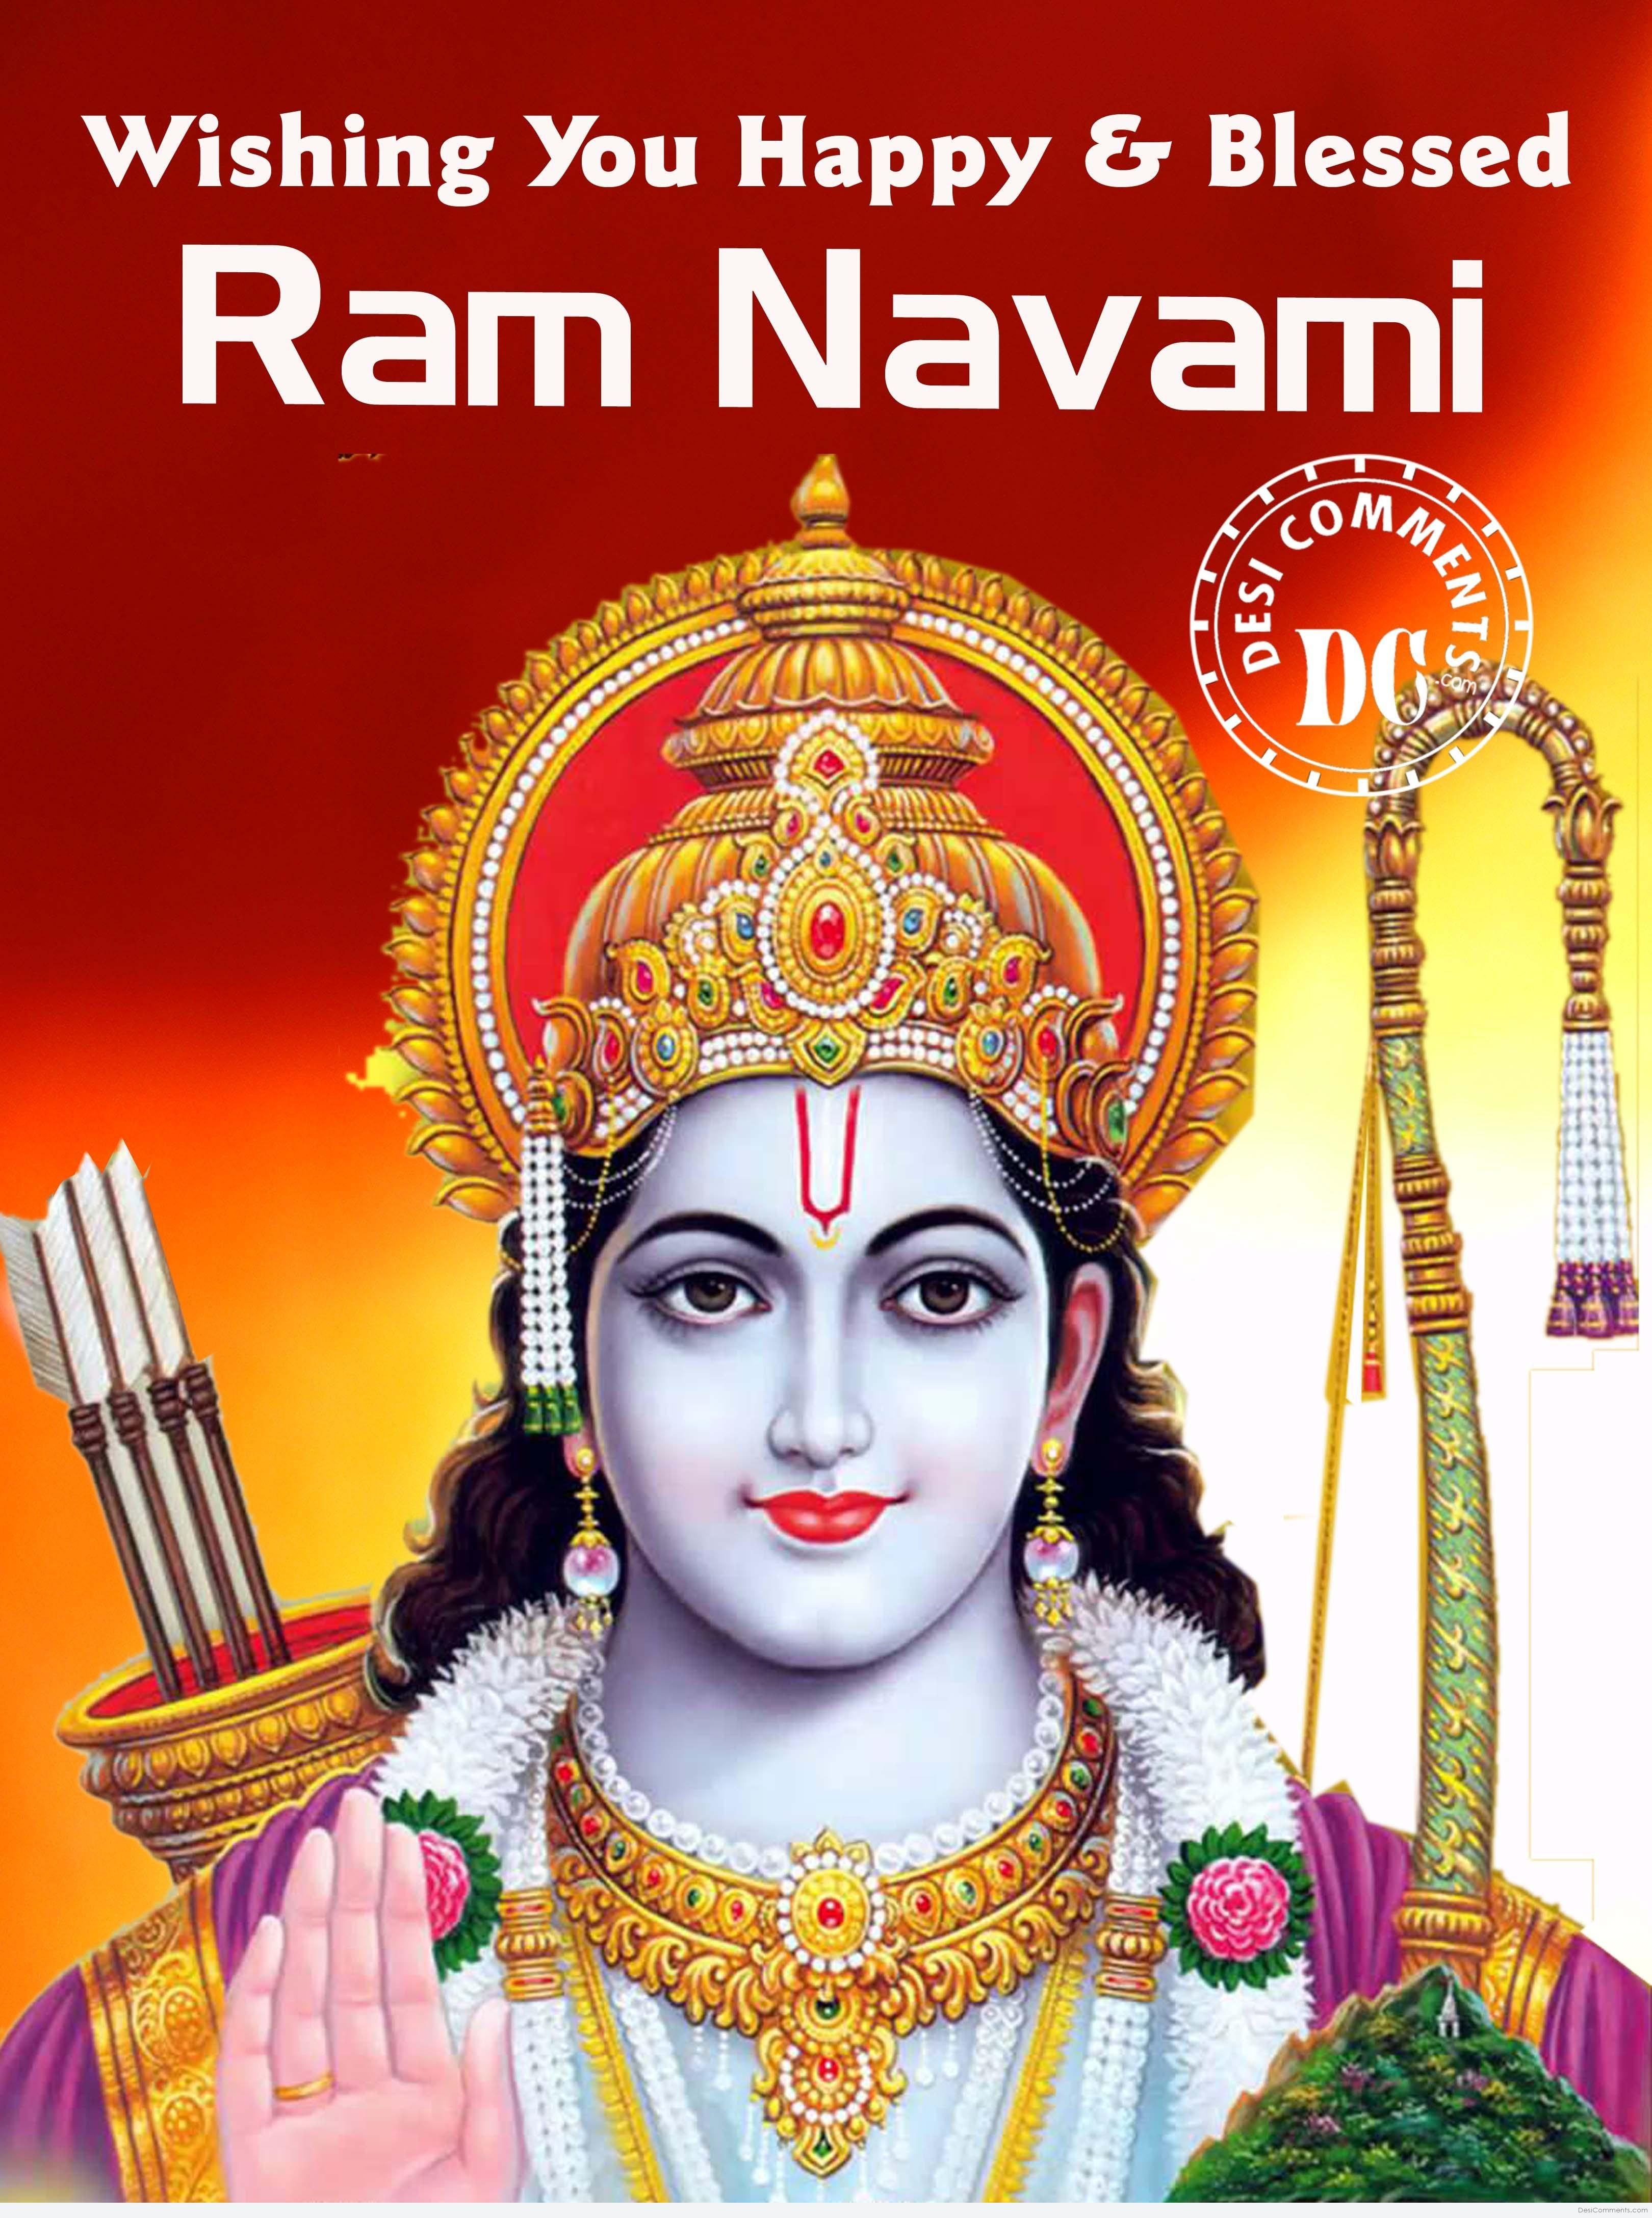 Ram Navami Picture, Image, Photo